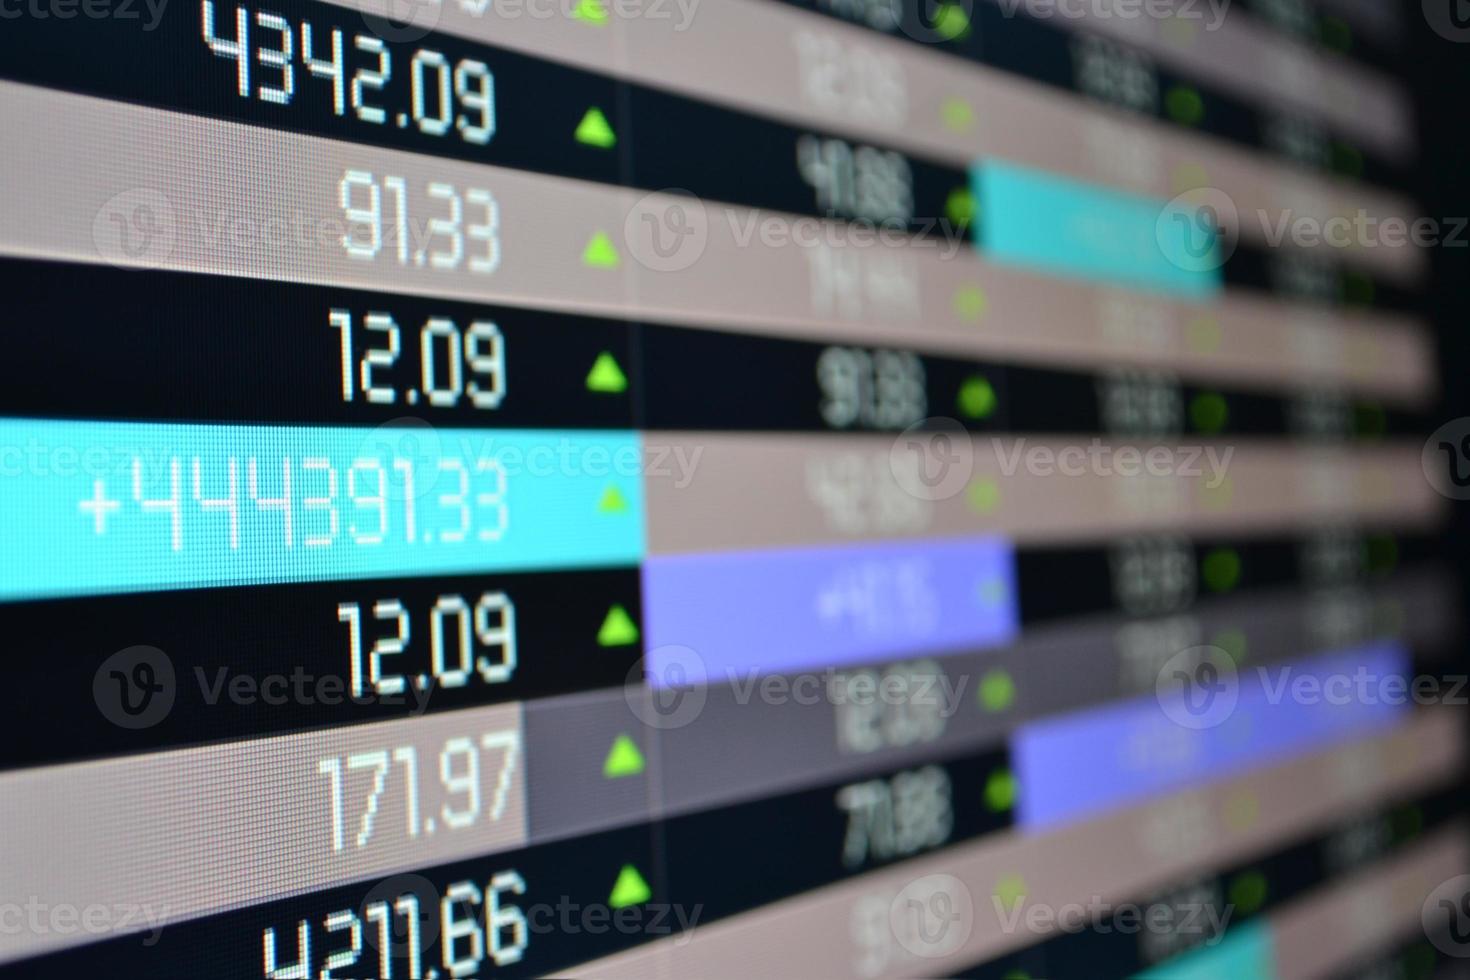 Stock Exchange Financial Data Chart photo